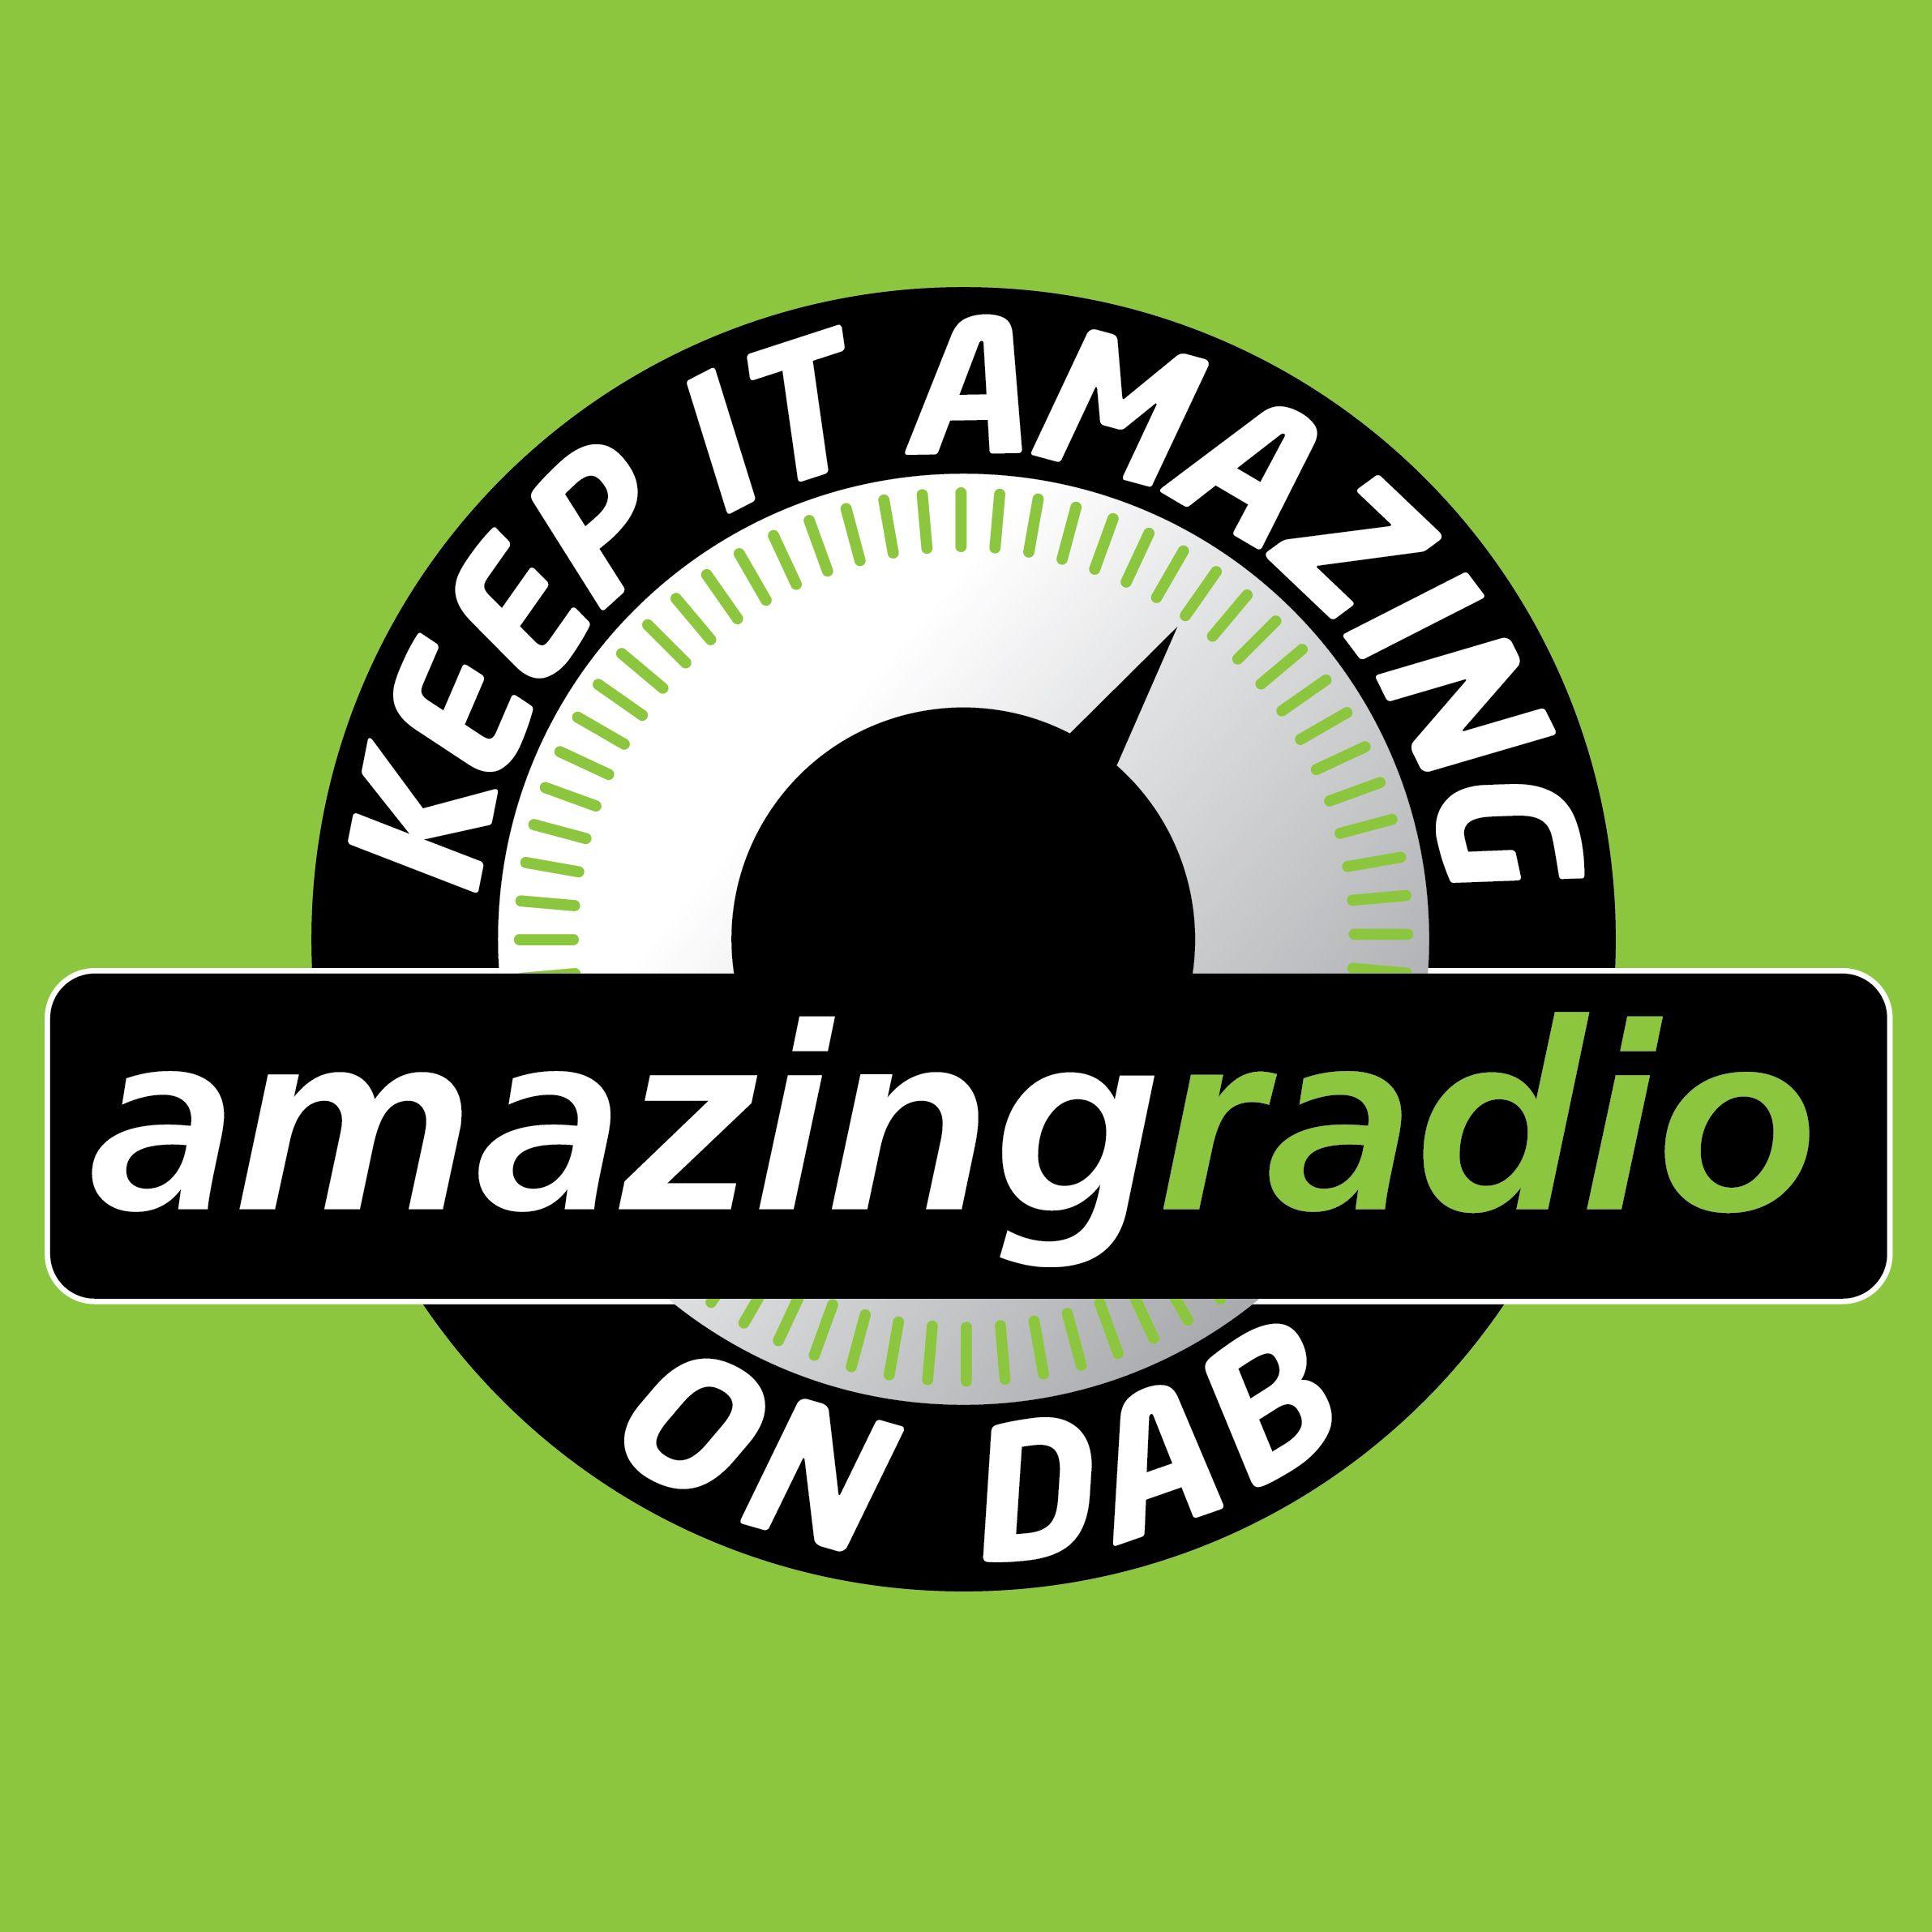 Keep.com Logo - Keep Amazing On DAB logos